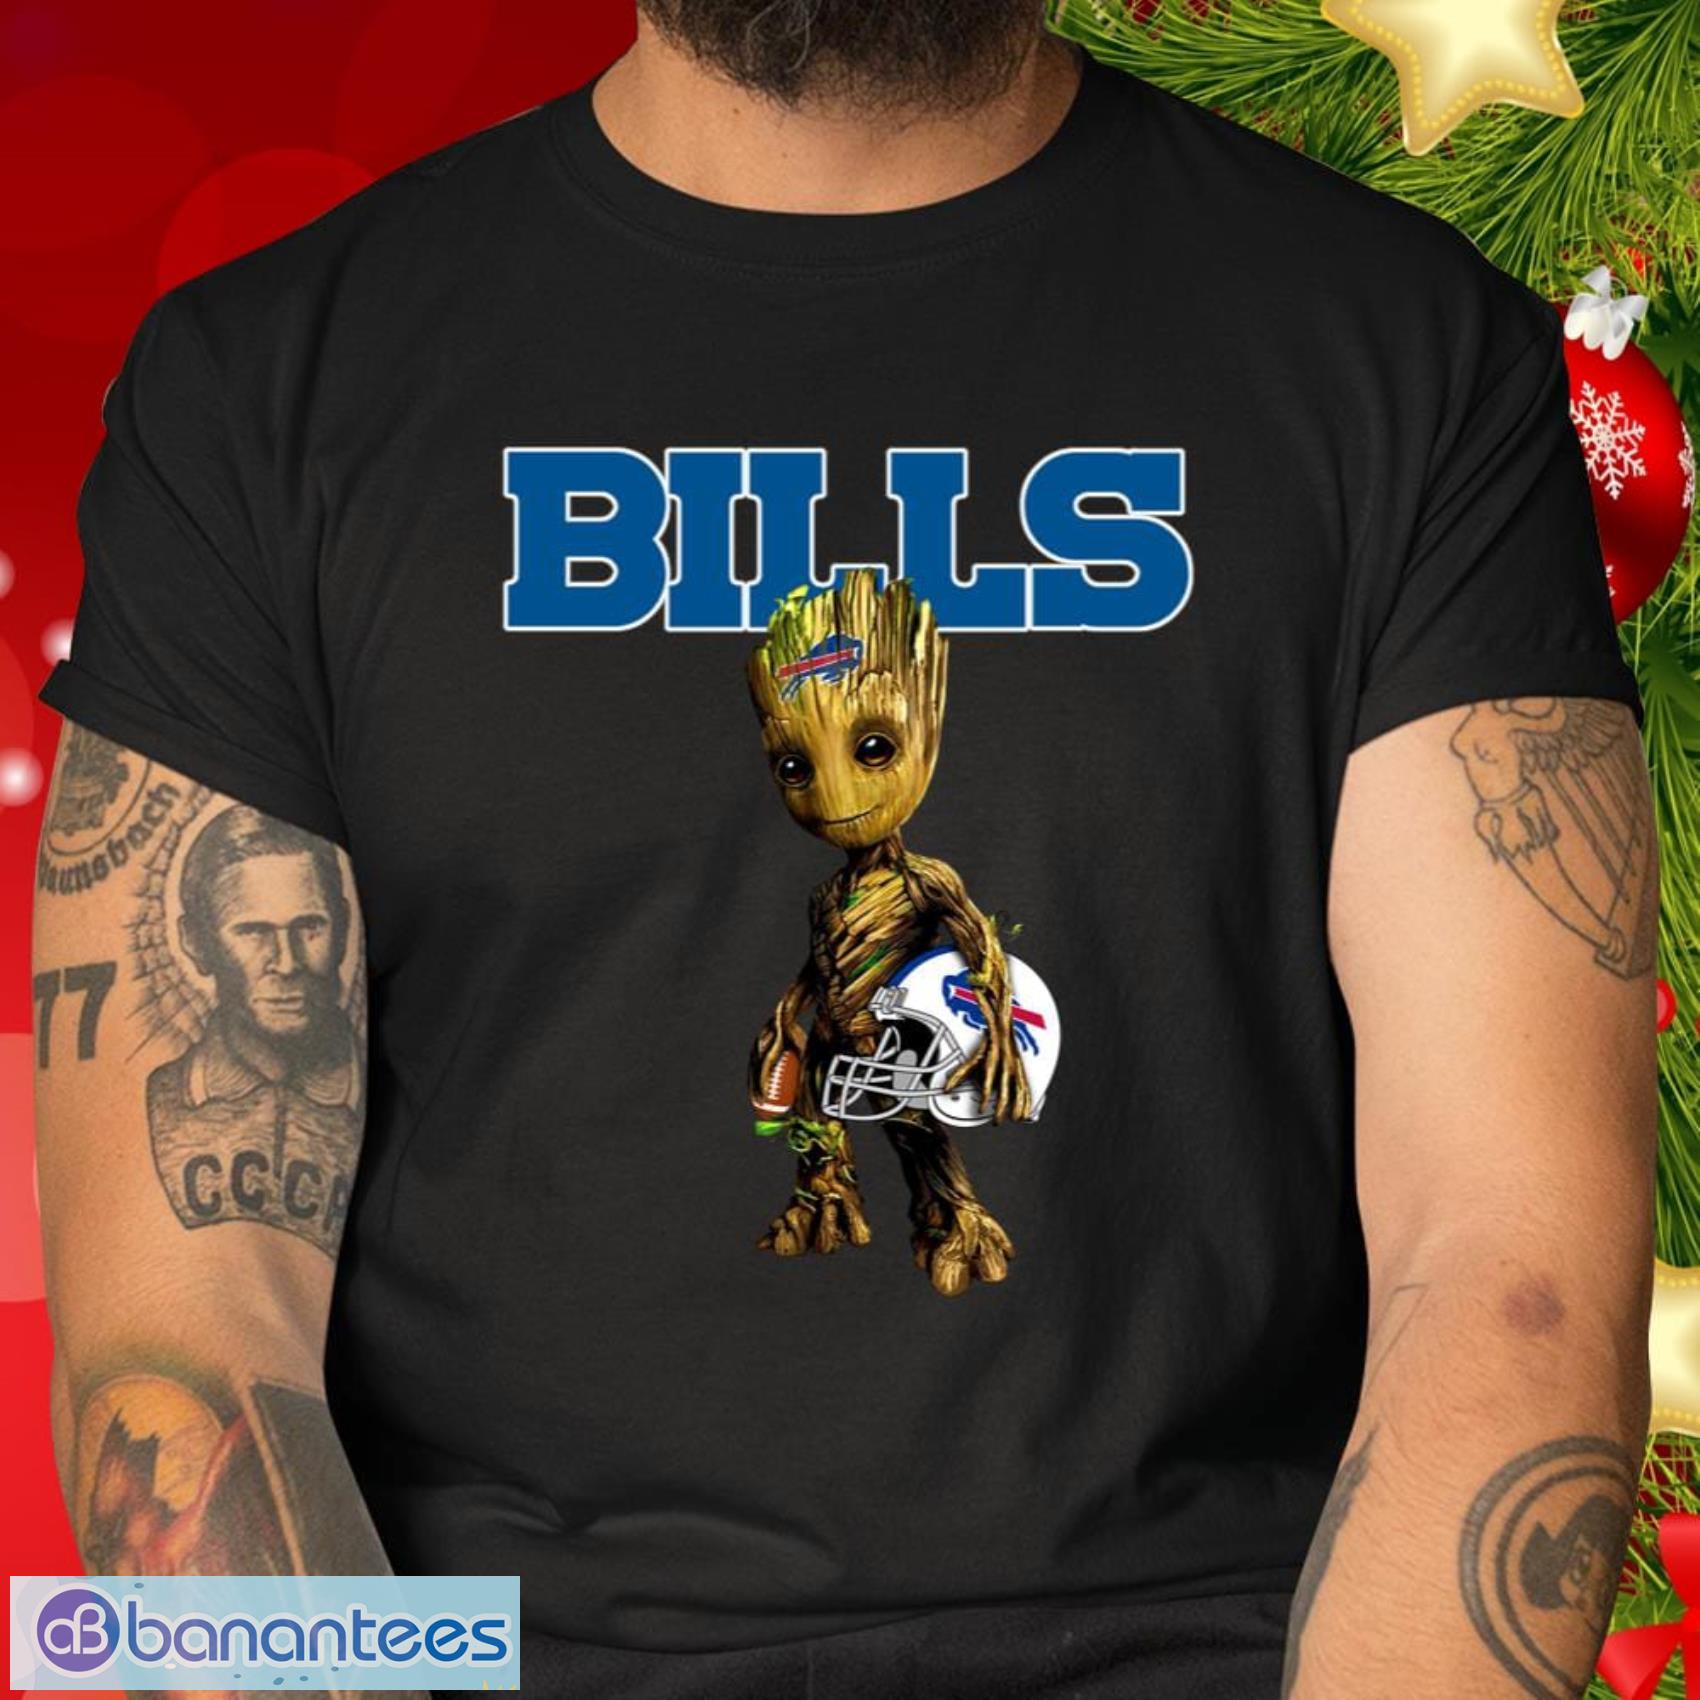 Buffalo Bills NFL Football Gift Fr Fans Groot Marvel Guardians Of The Galaxy T Shirt - Buffalo Bills NFL Football Groot Marvel Guardians Of The Galaxy T Shirt_2